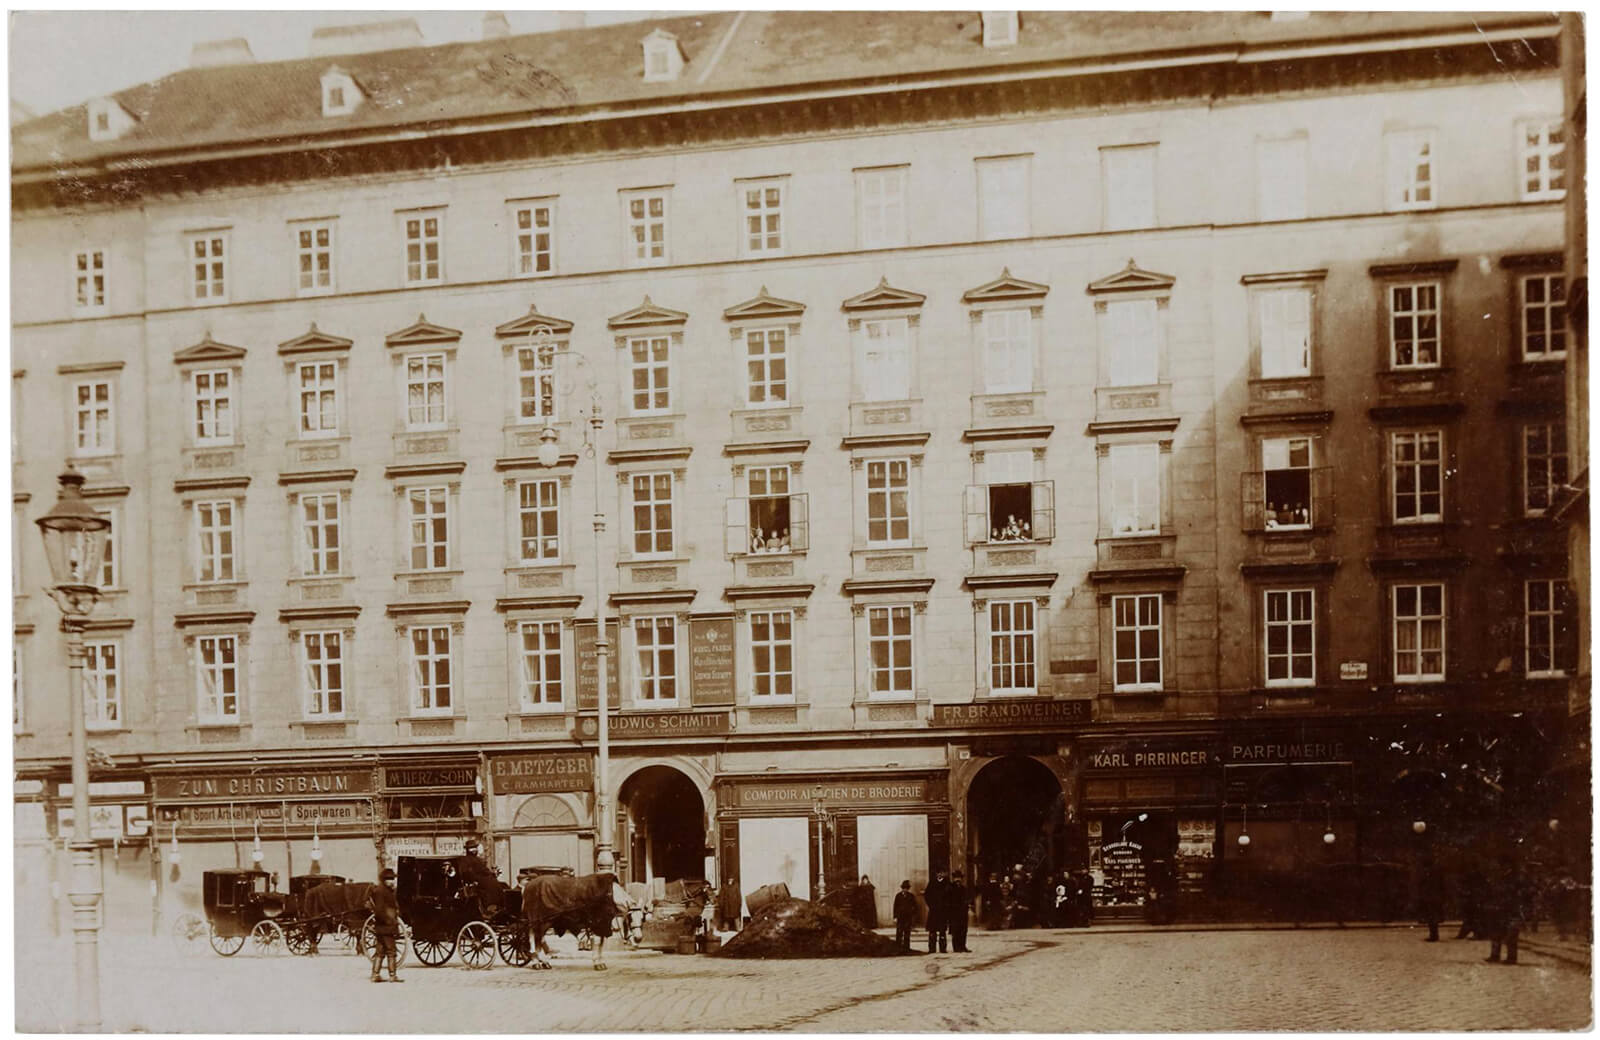 Zwettlerhof mit verschiedenen Geschäften, darunter Herz & Sohn (links), Wien Museum 